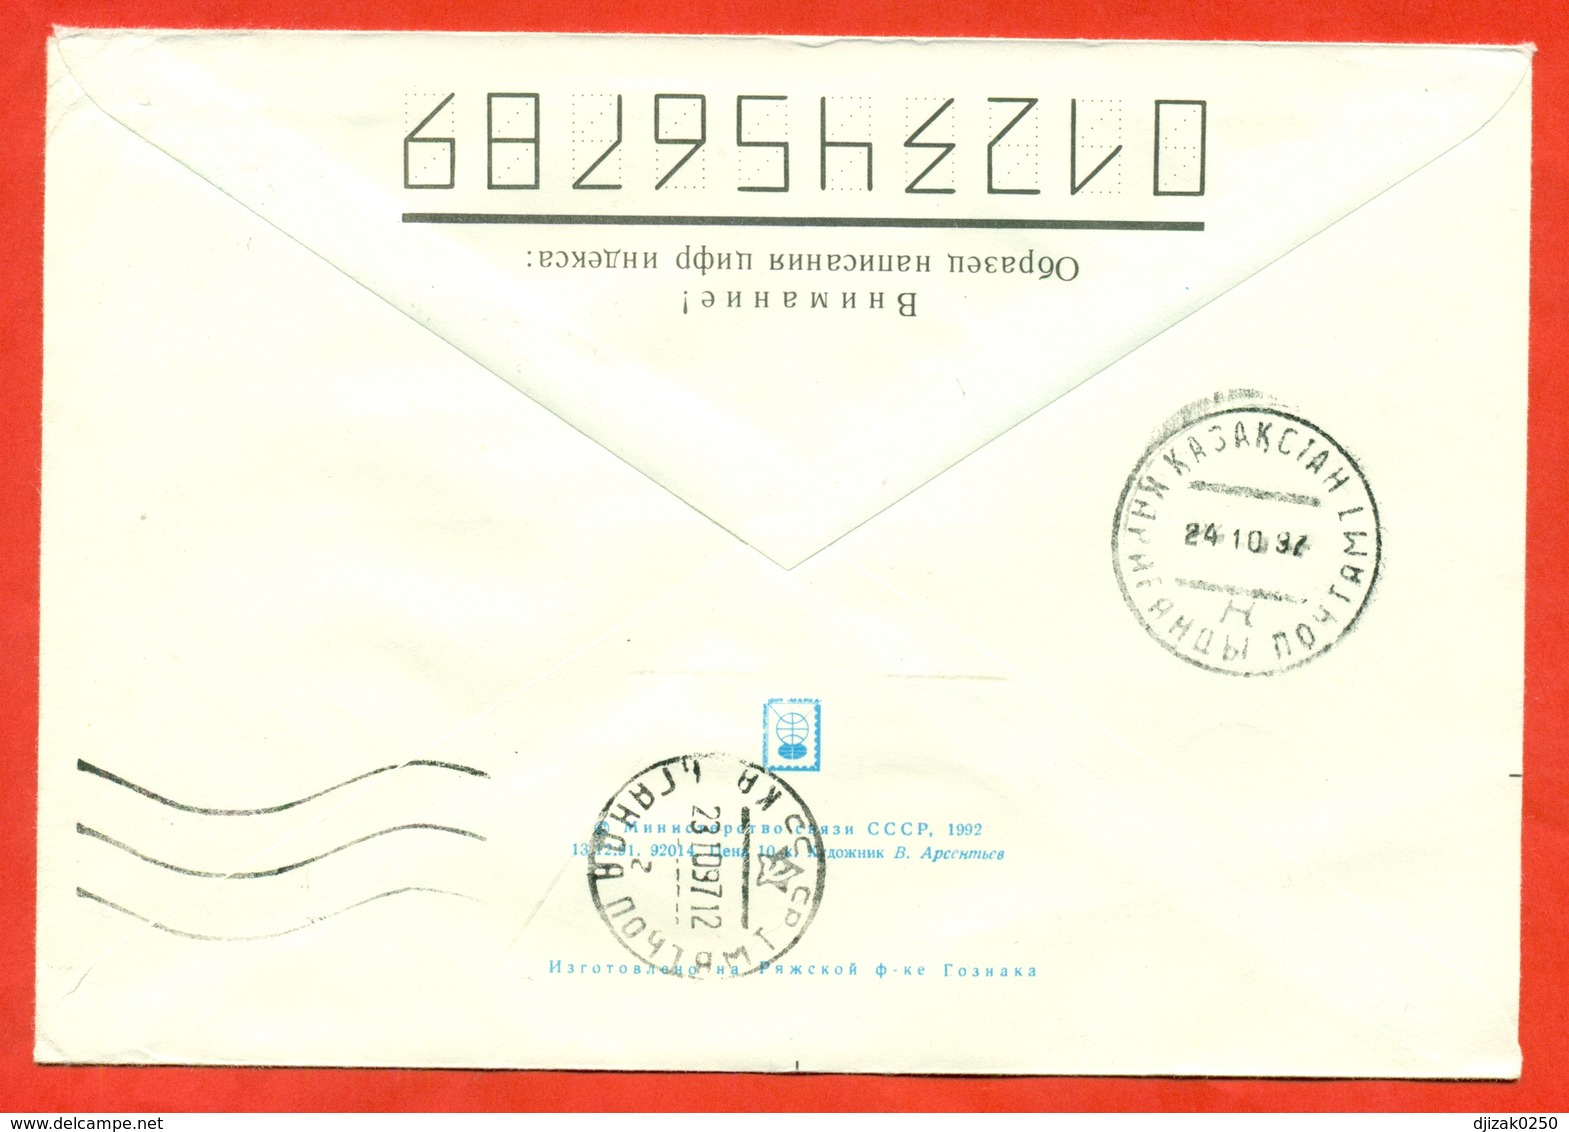 Kazakhstan 1997. The Envelope Is Really Past Mail. - Kazakhstan